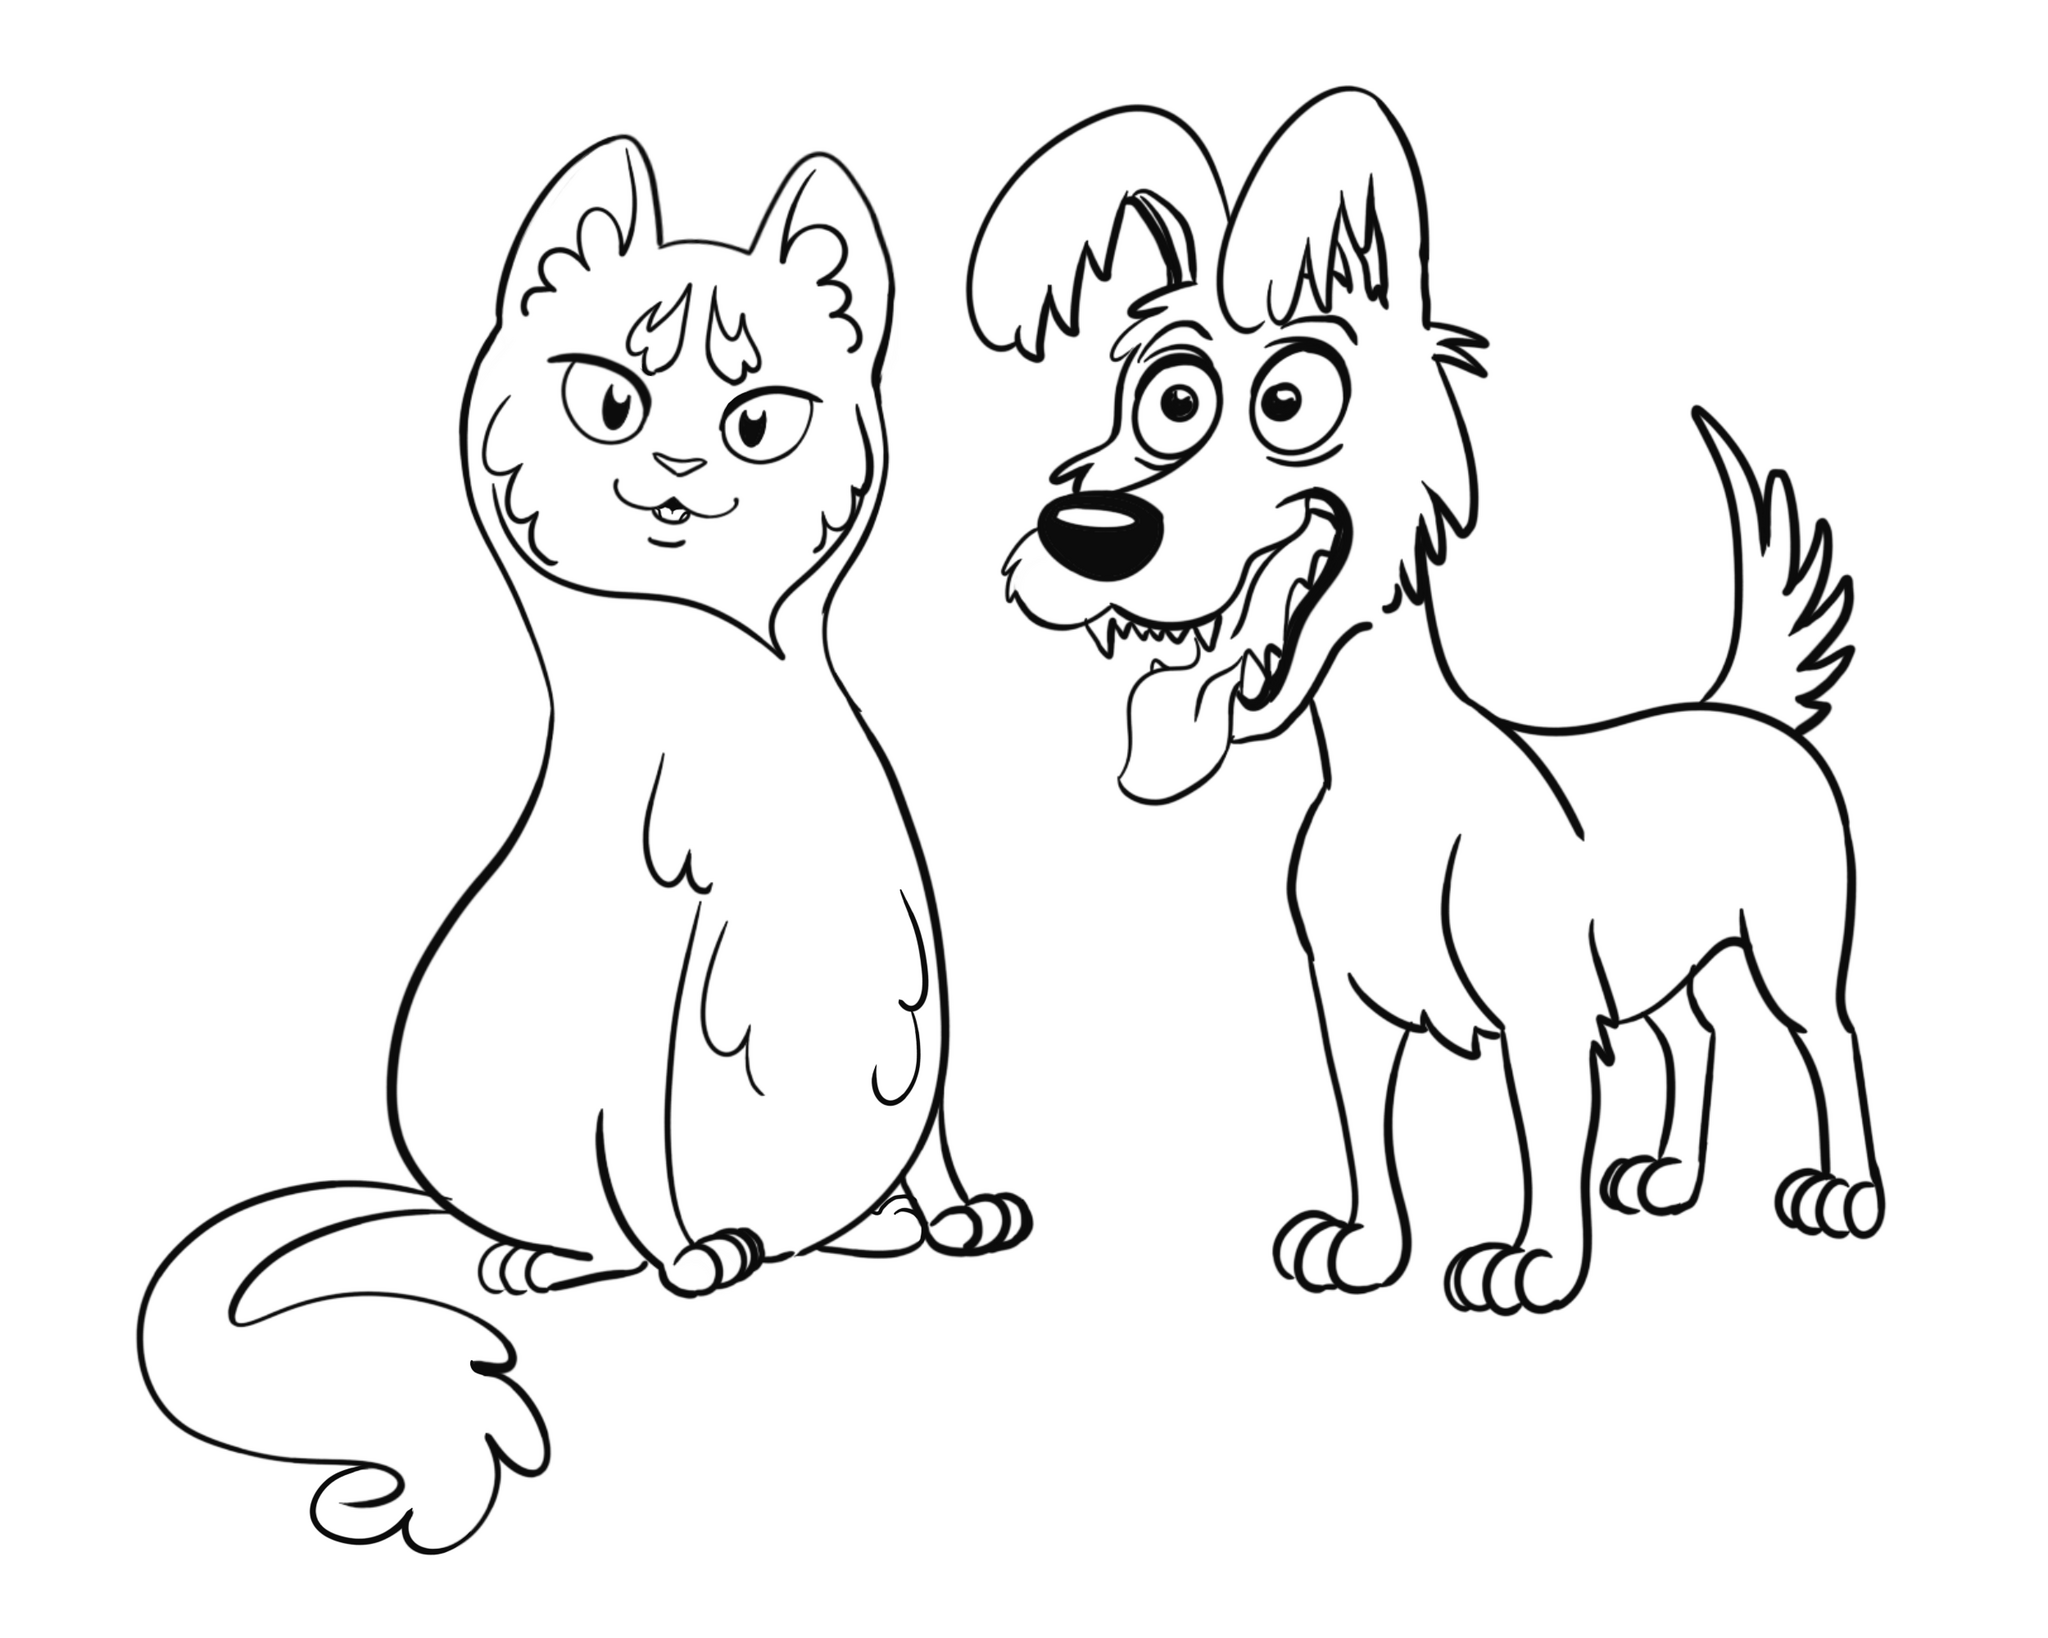 Раскраска, А4 «Арт-терапия. Пёс и кот», 16стр., с наклейками